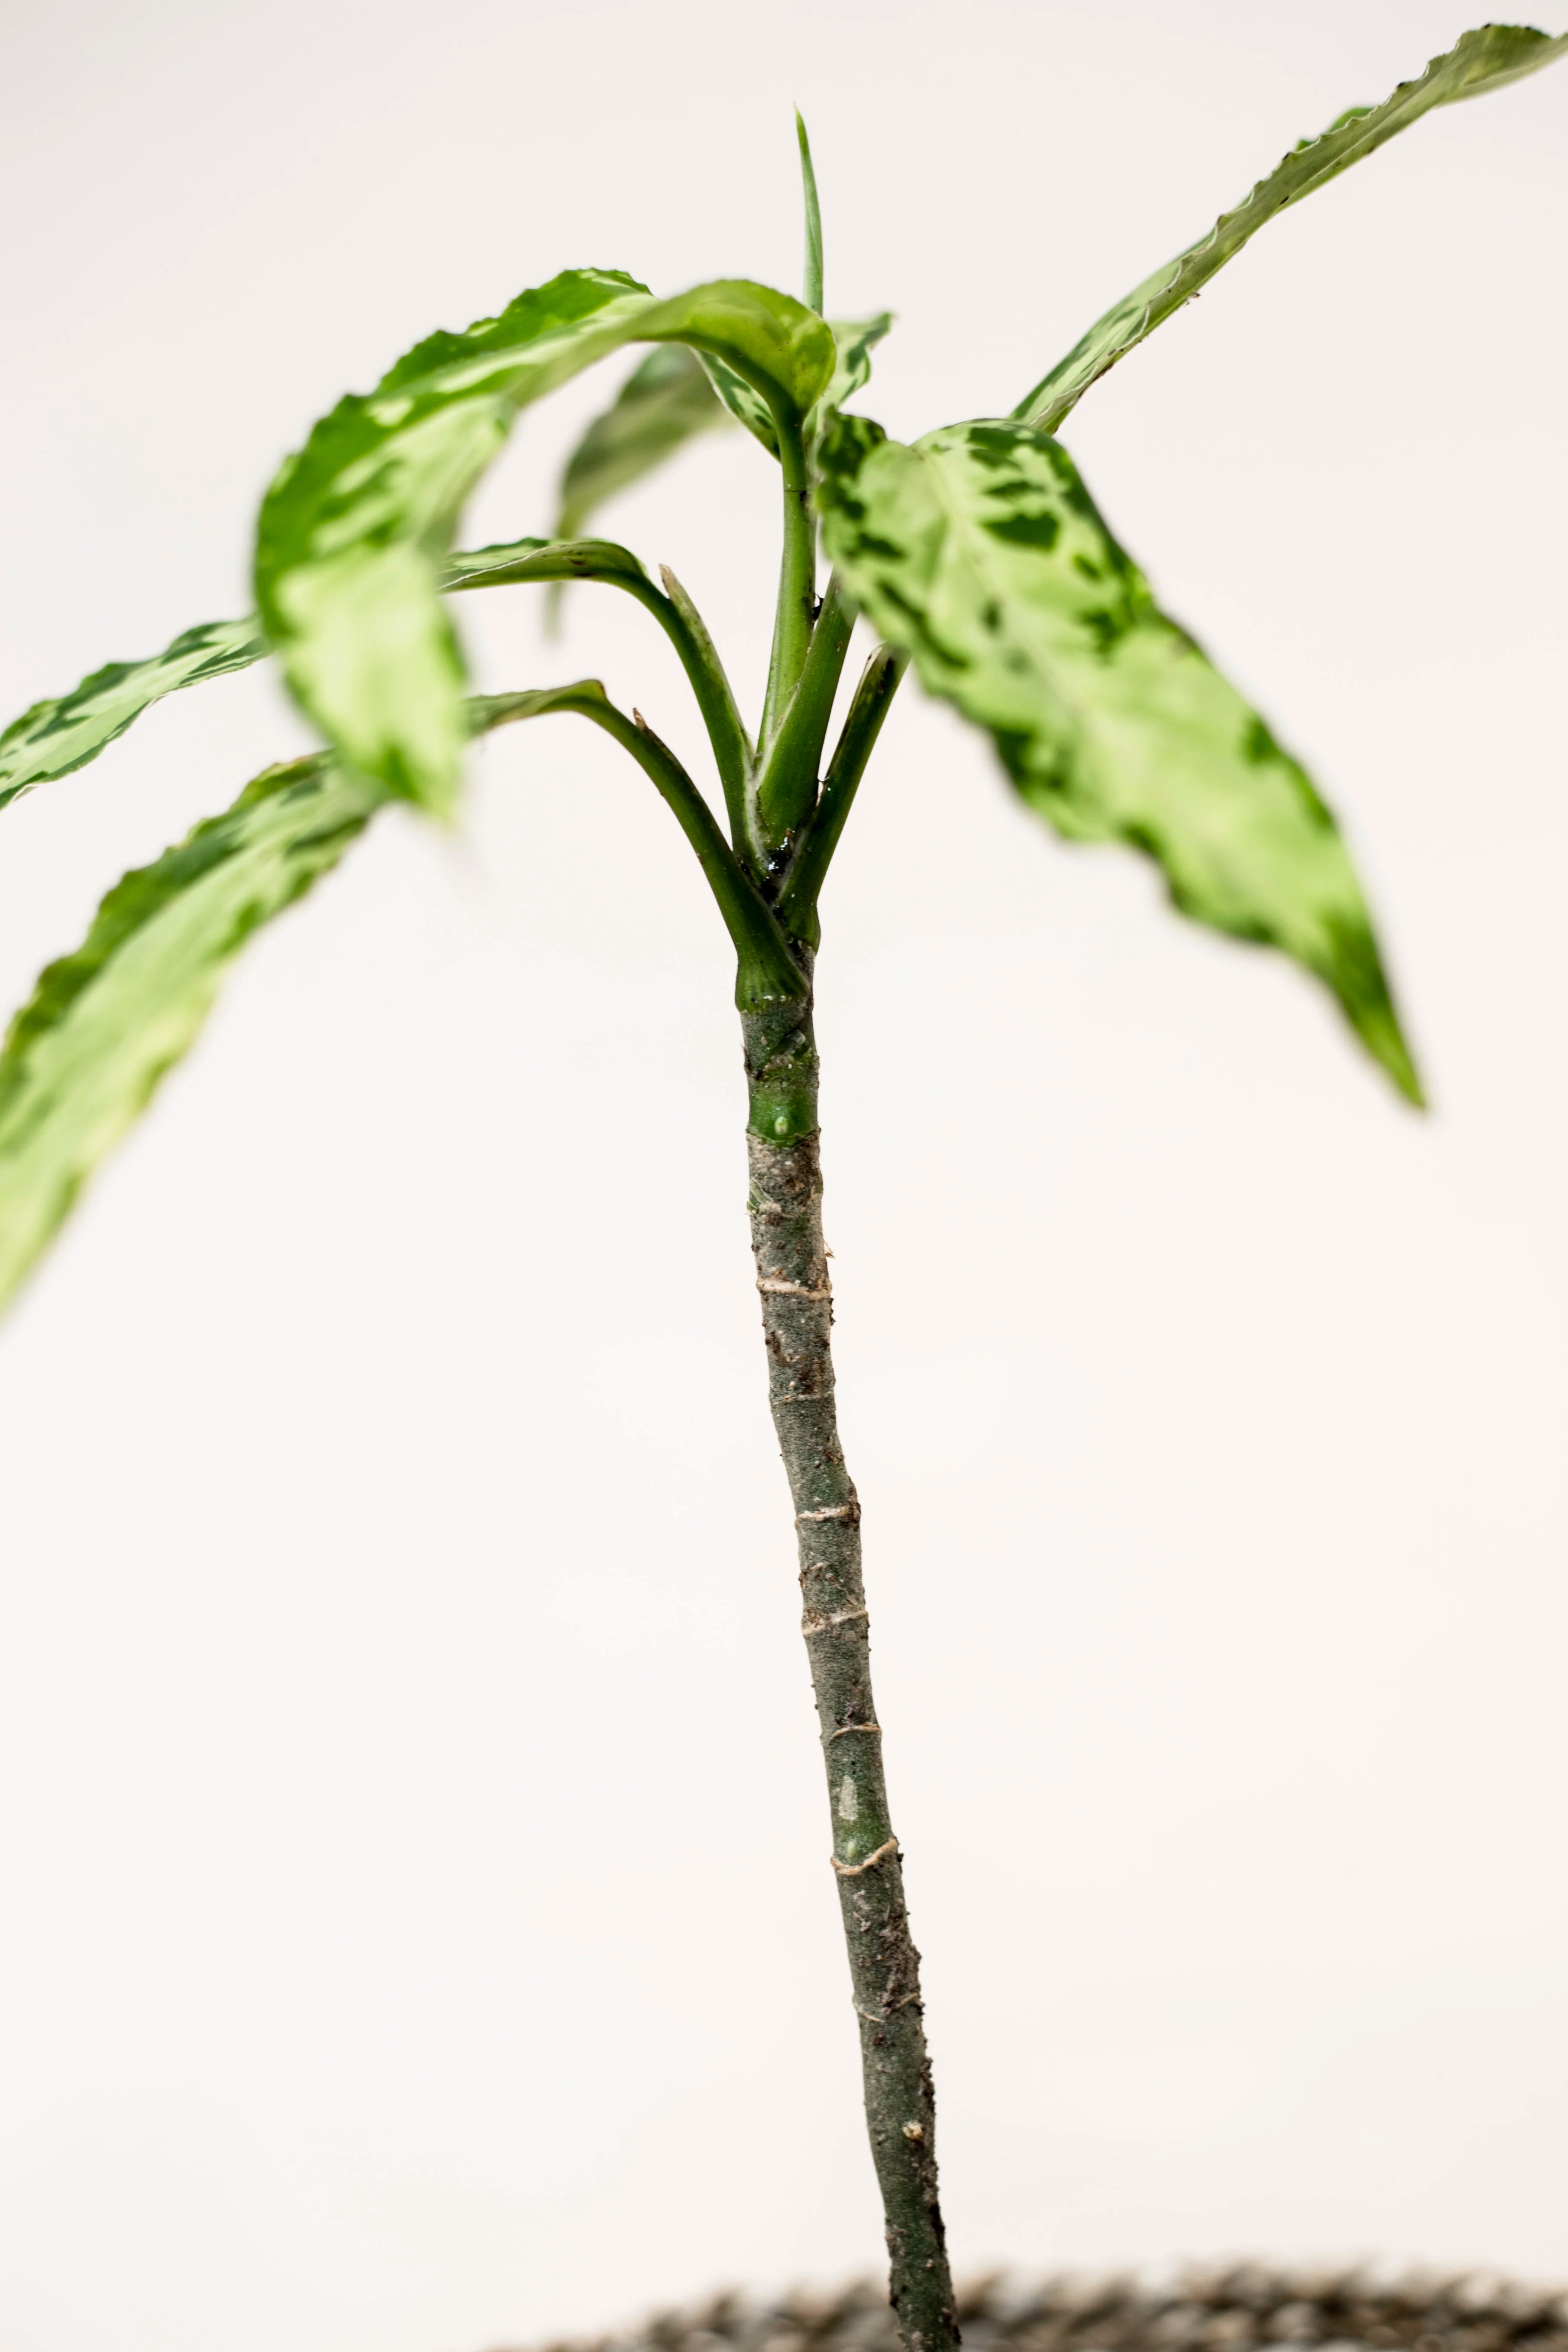 Aglaonema pictum var. bicolor "narrow form"